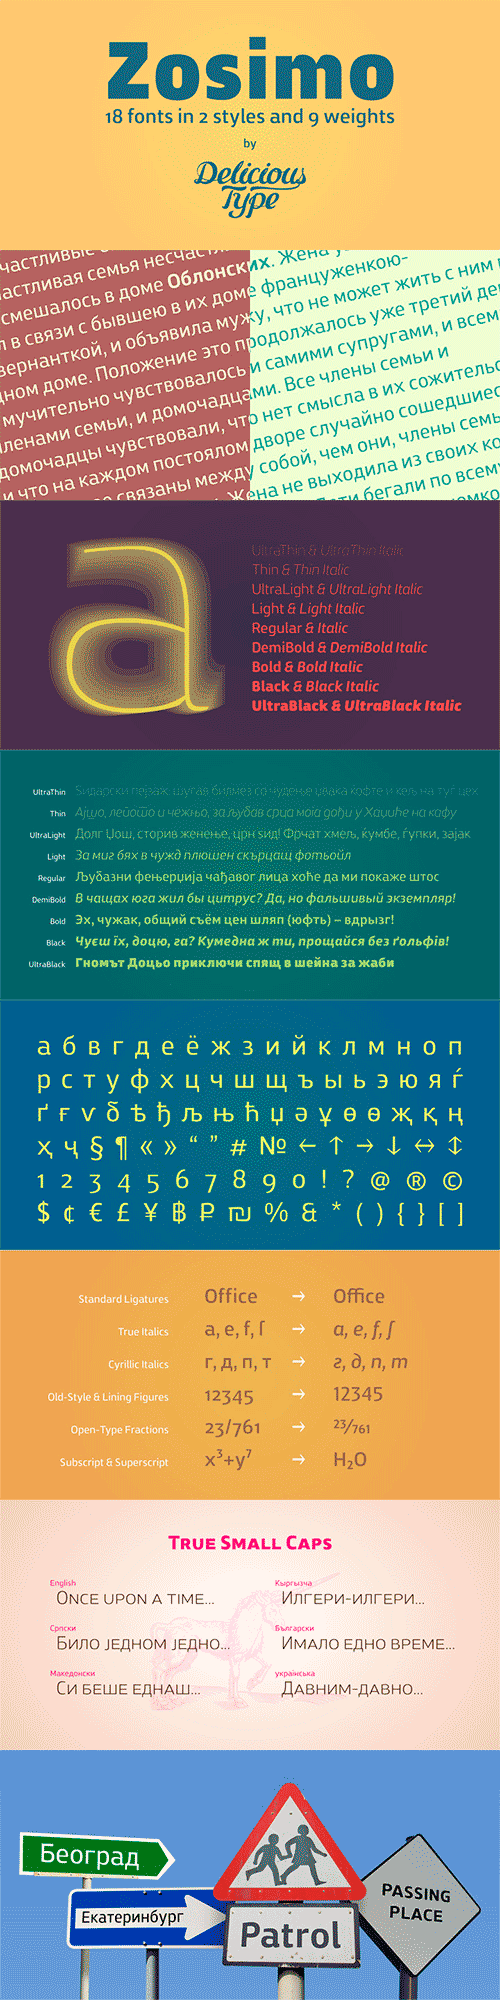 Zosimo Cyrillic font family